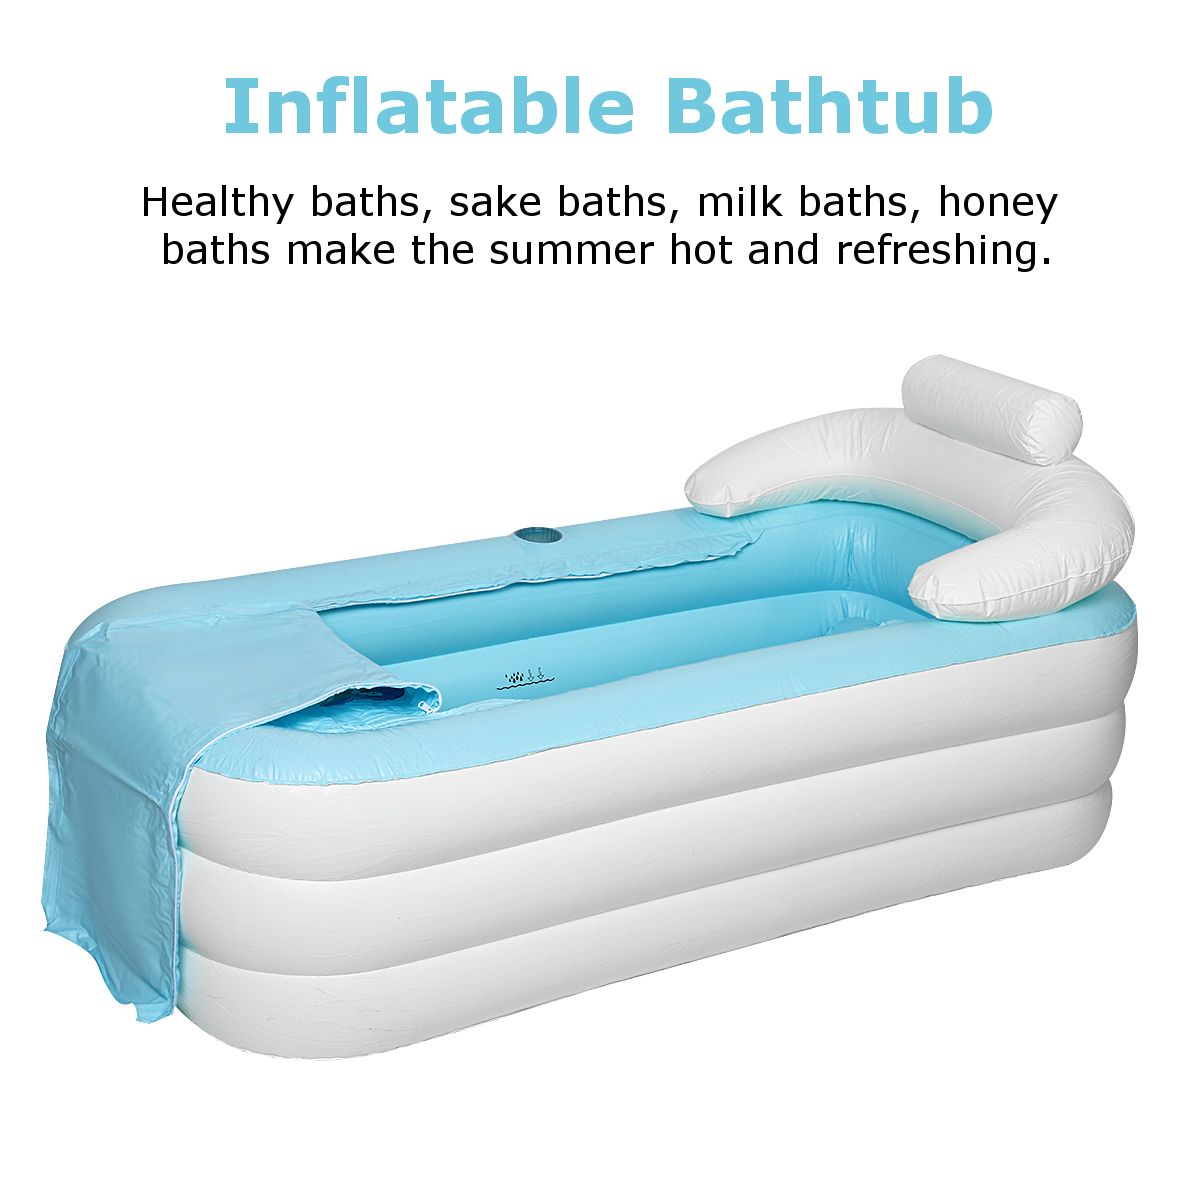 Adult--Child-PVC-Portable-Bathtub-Foldable-Inflatable-Warm-Bath-Tub-Spa-Blue-63quot-1750626